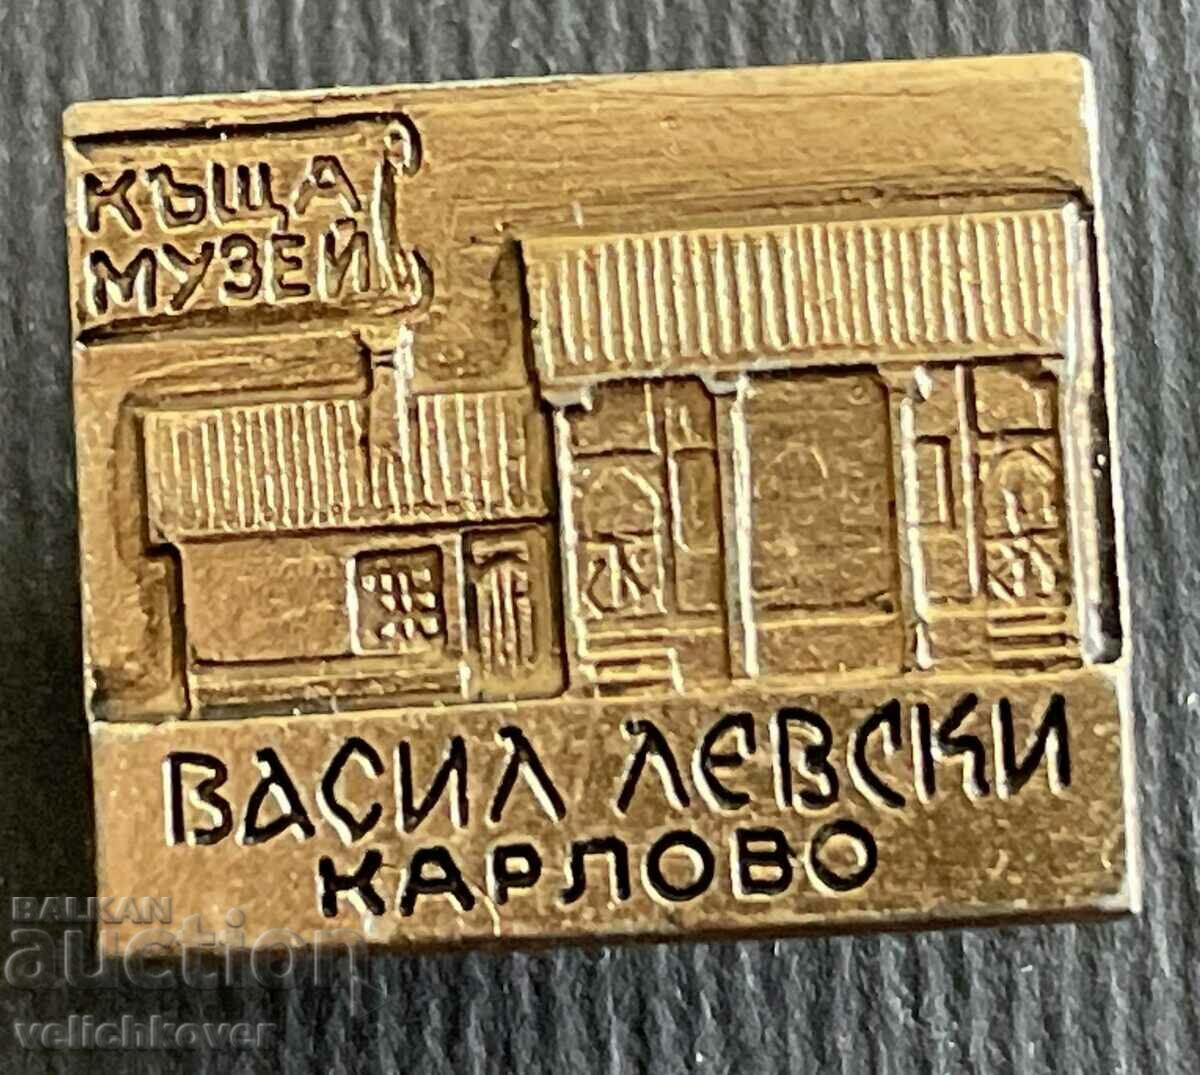 36405 България знак Къща музей Васил Левски Карлово